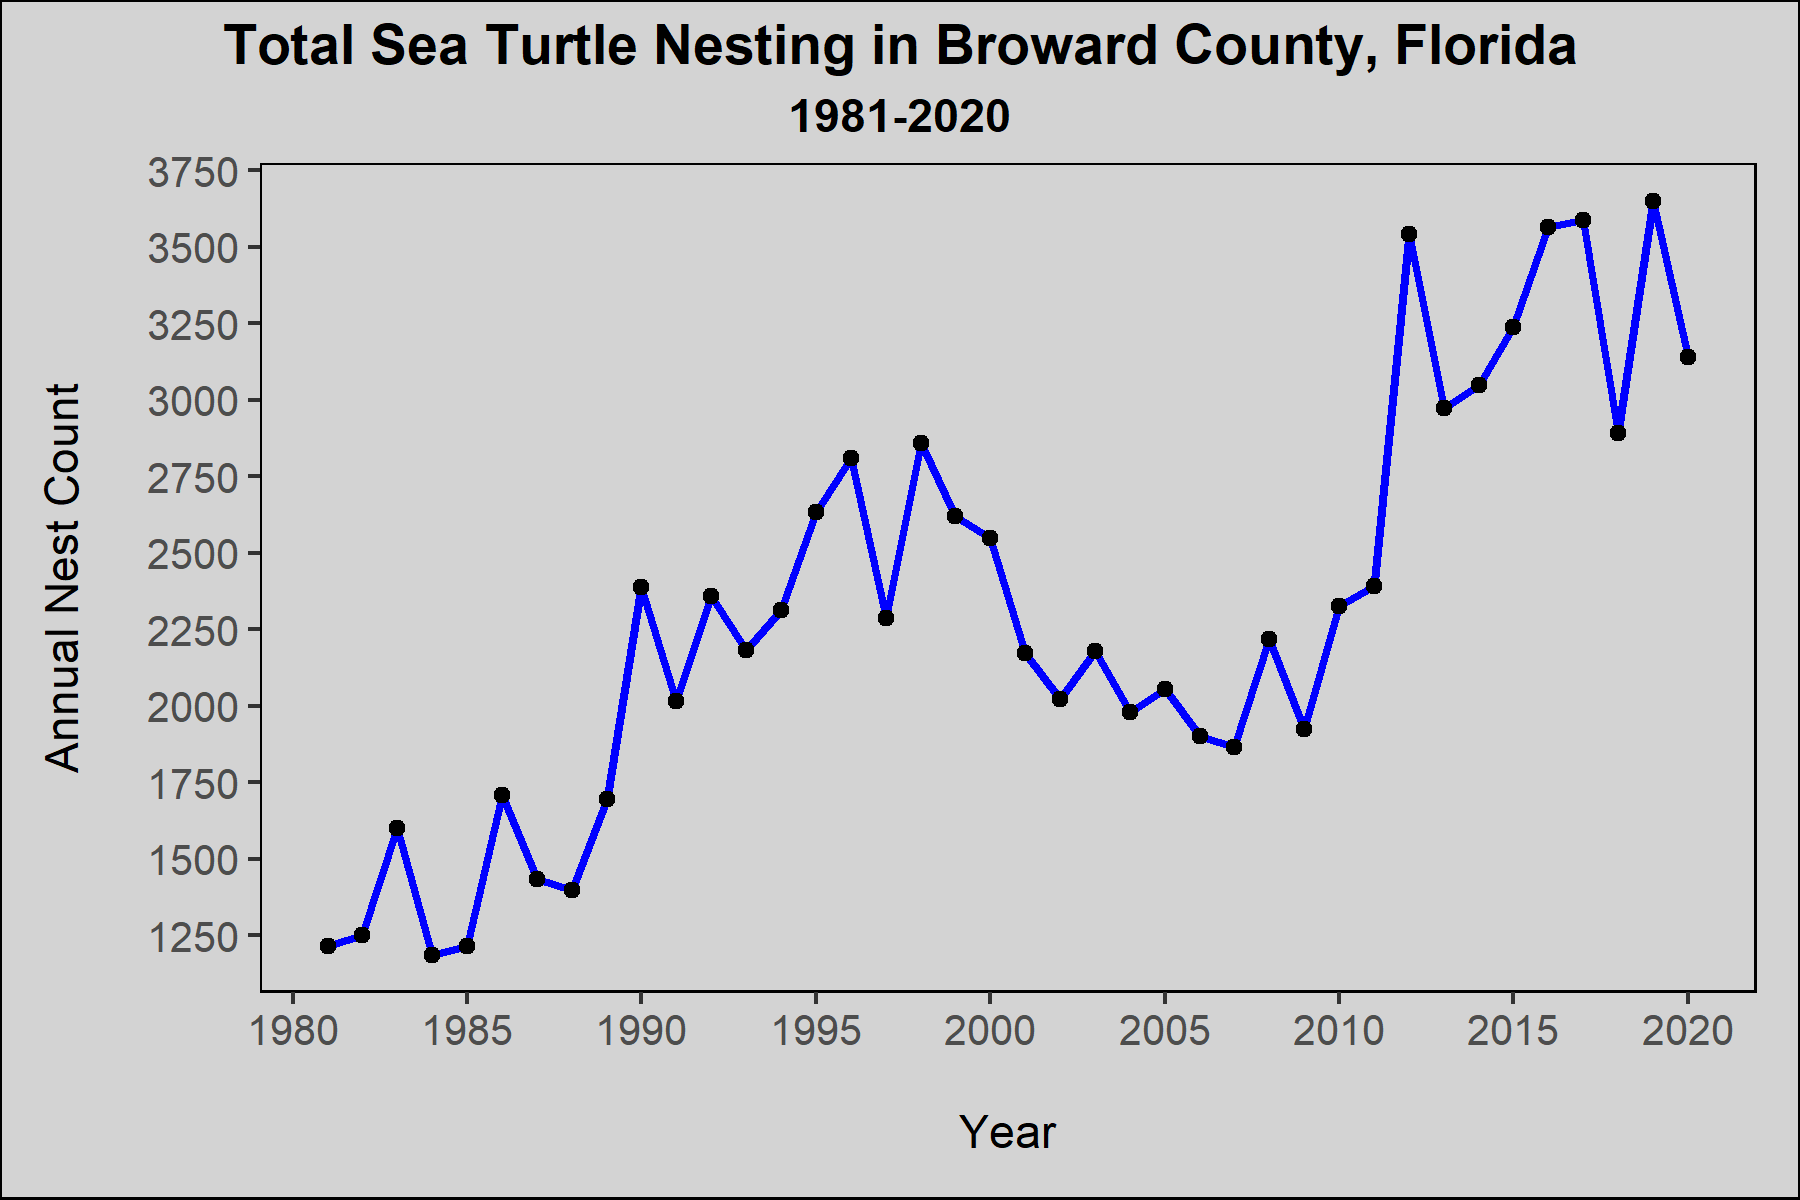 Historic Sea Turtle Nesting Trends